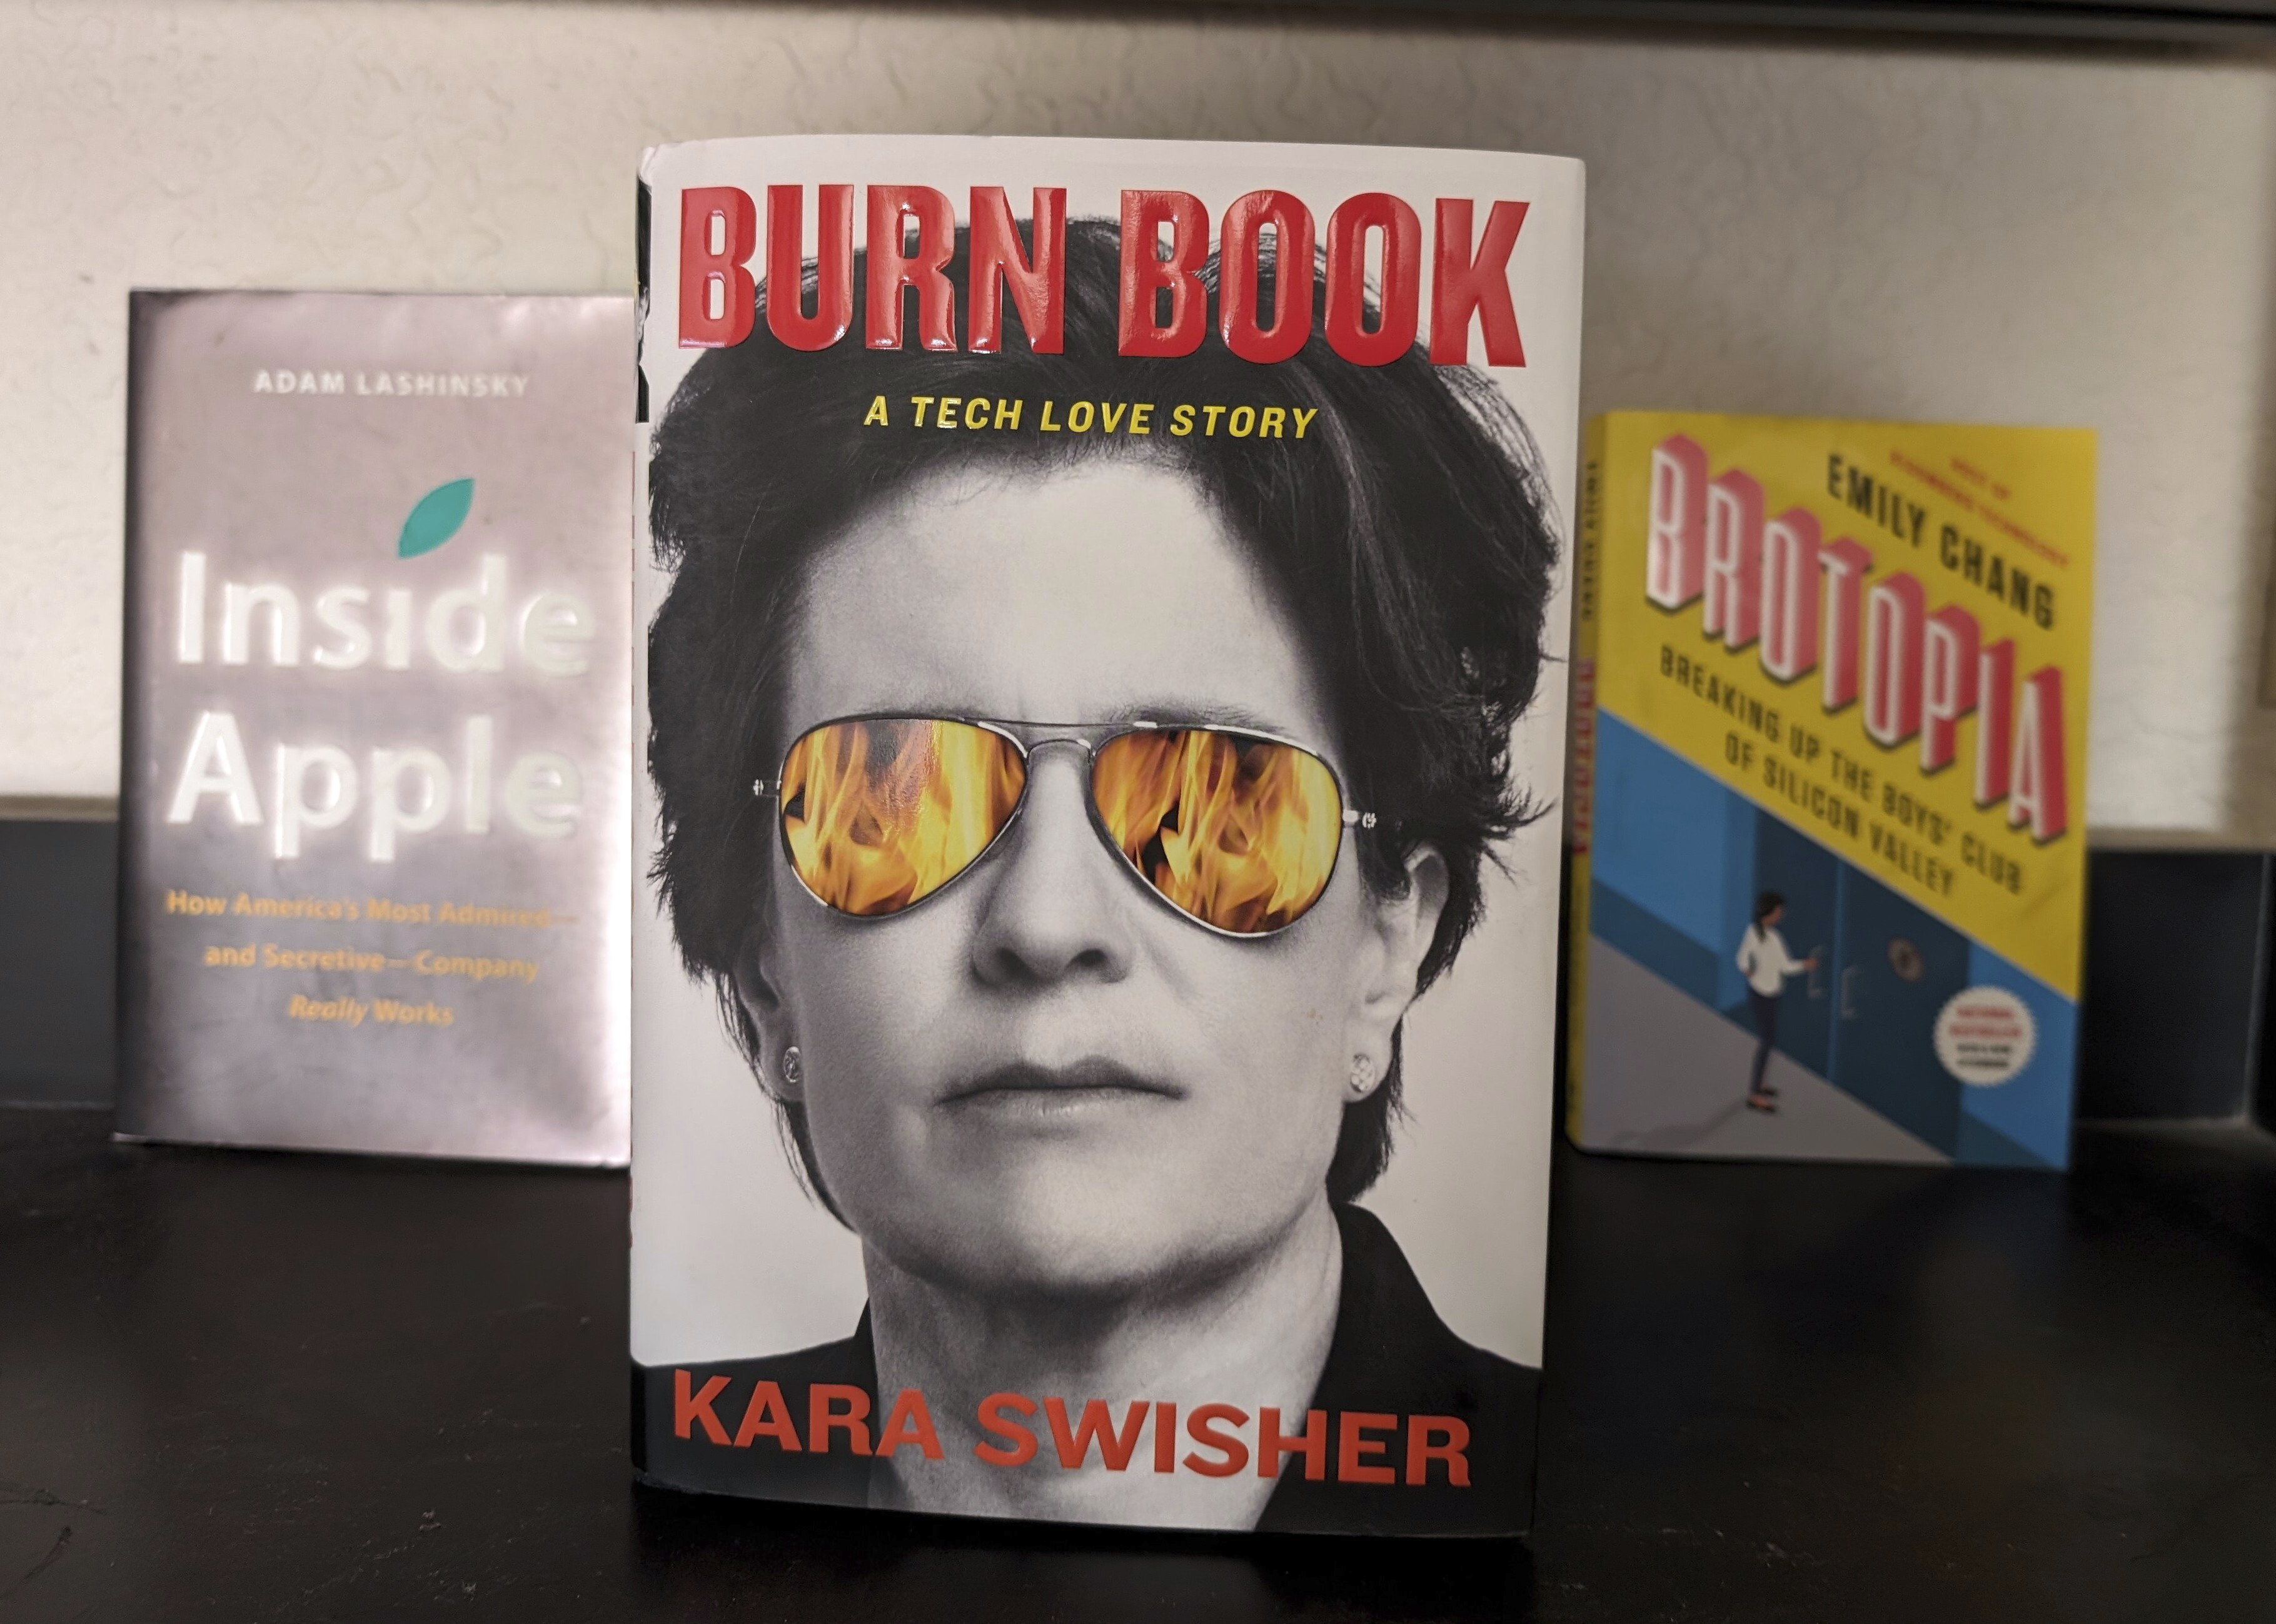 Kara Swisher's memoir 'Burn Book' torches tech titans